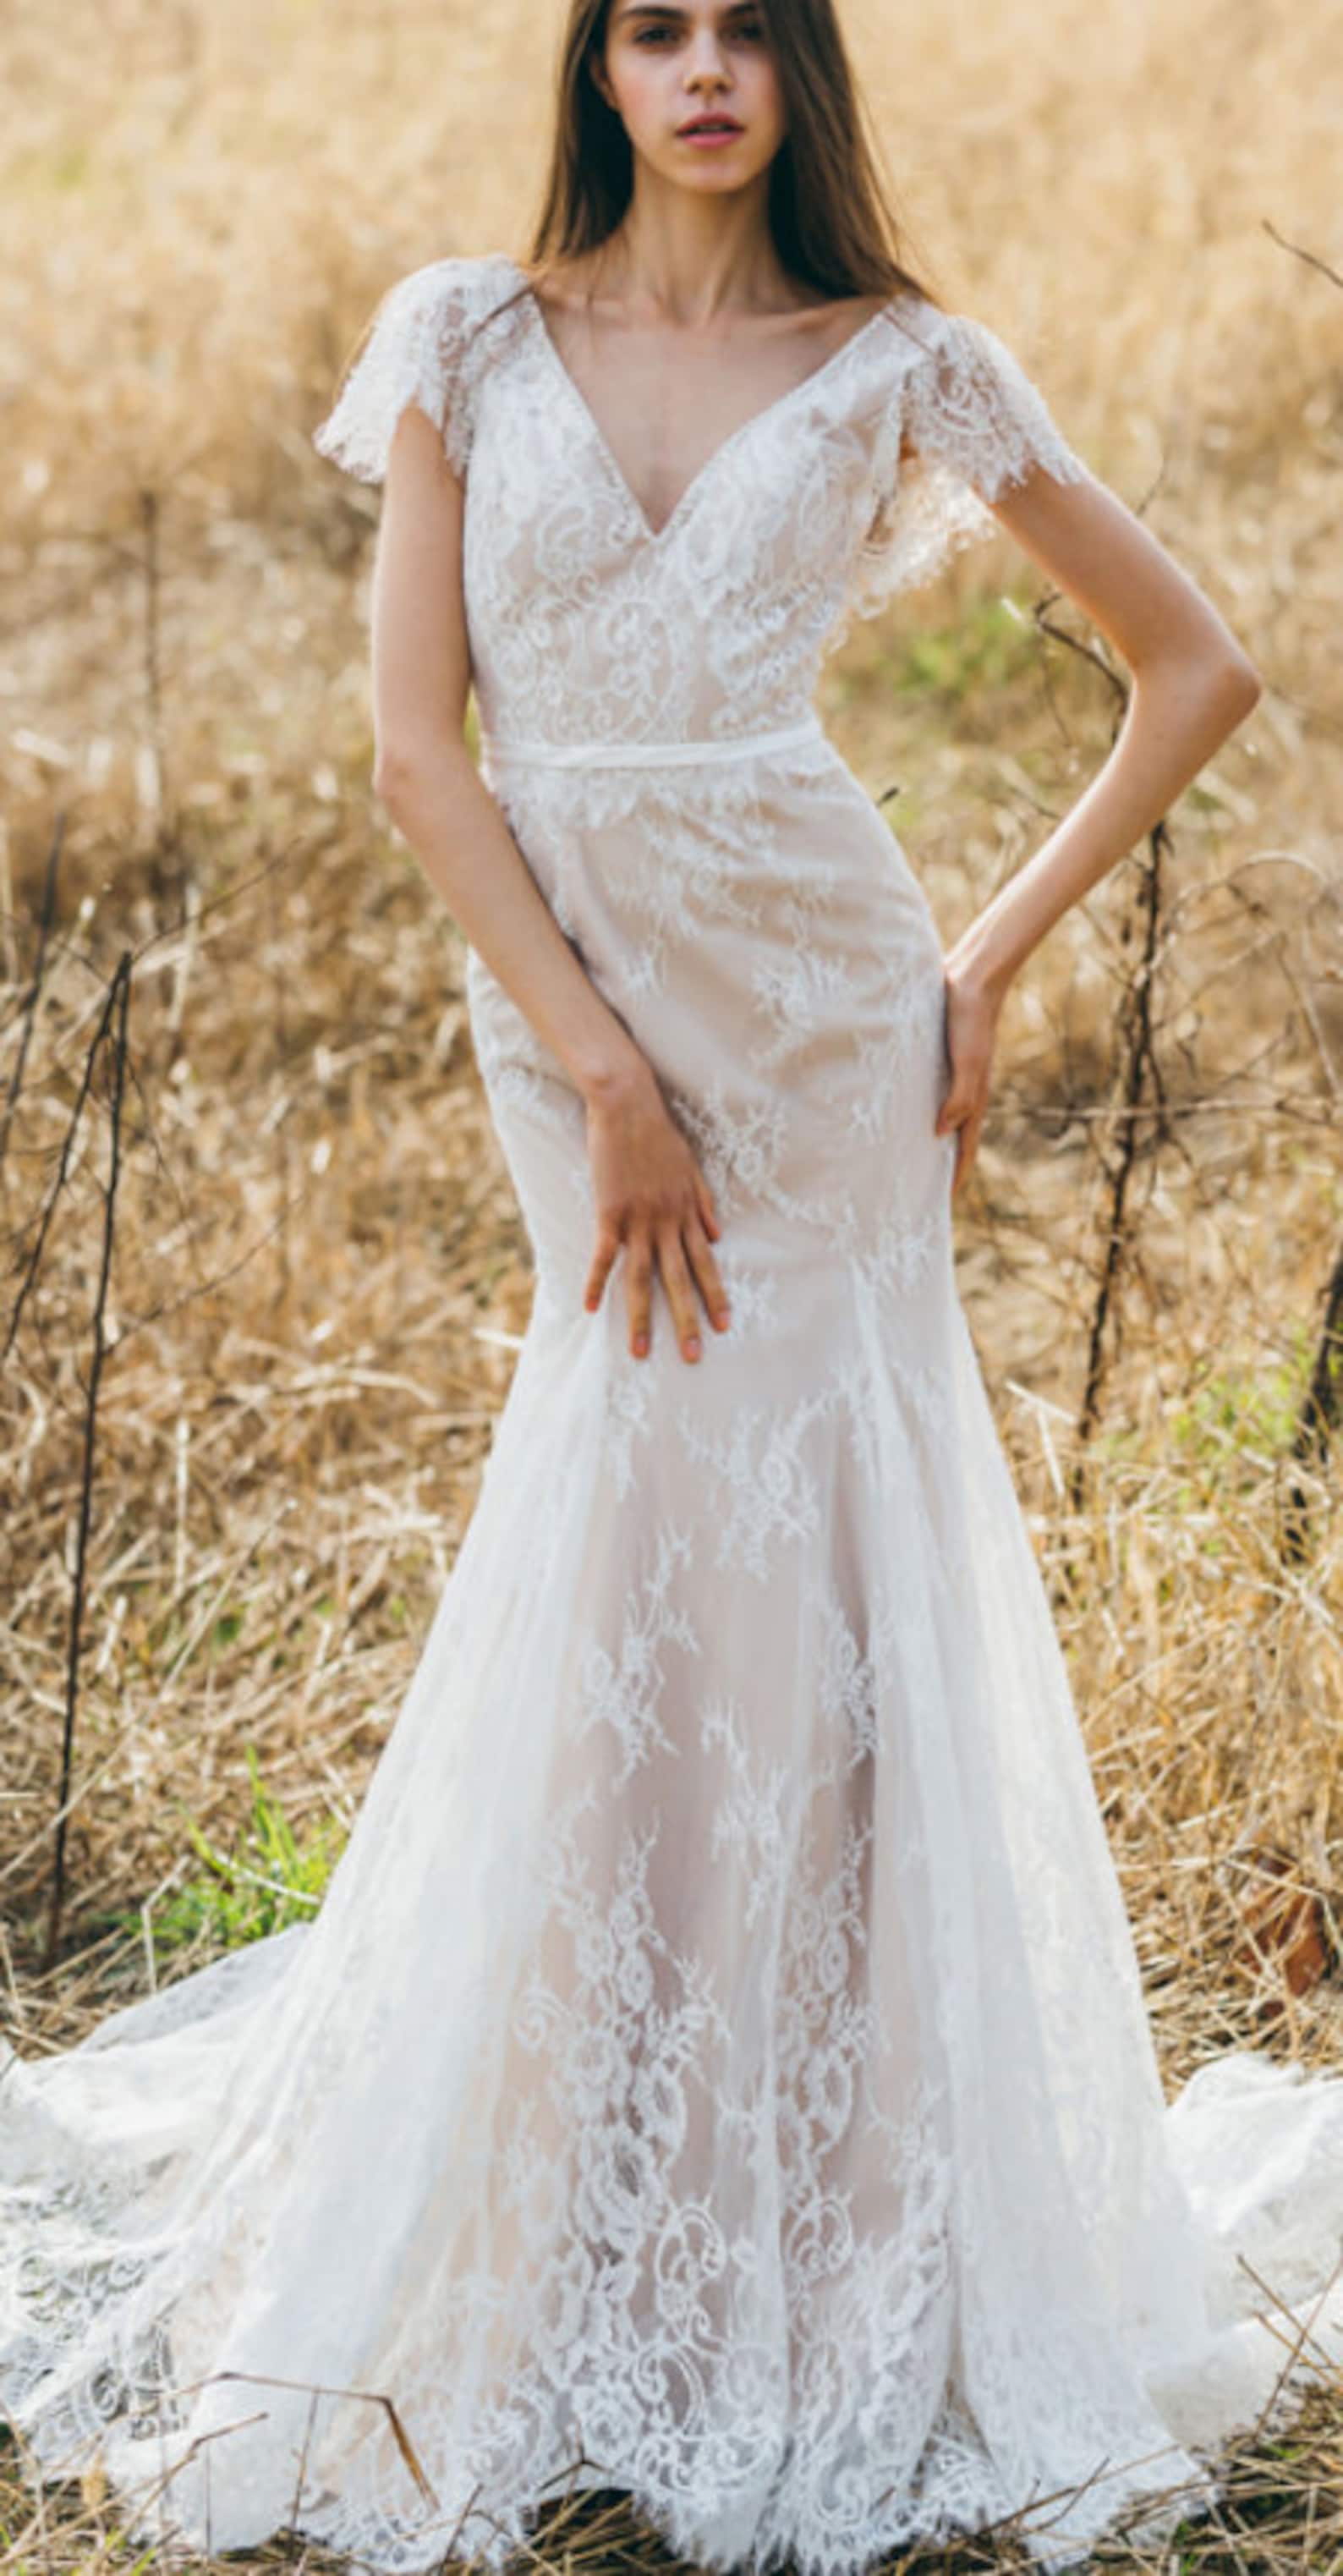 Customized Vintage Lace Wedding Dress Beach Wedding Gown Cap | Etsy